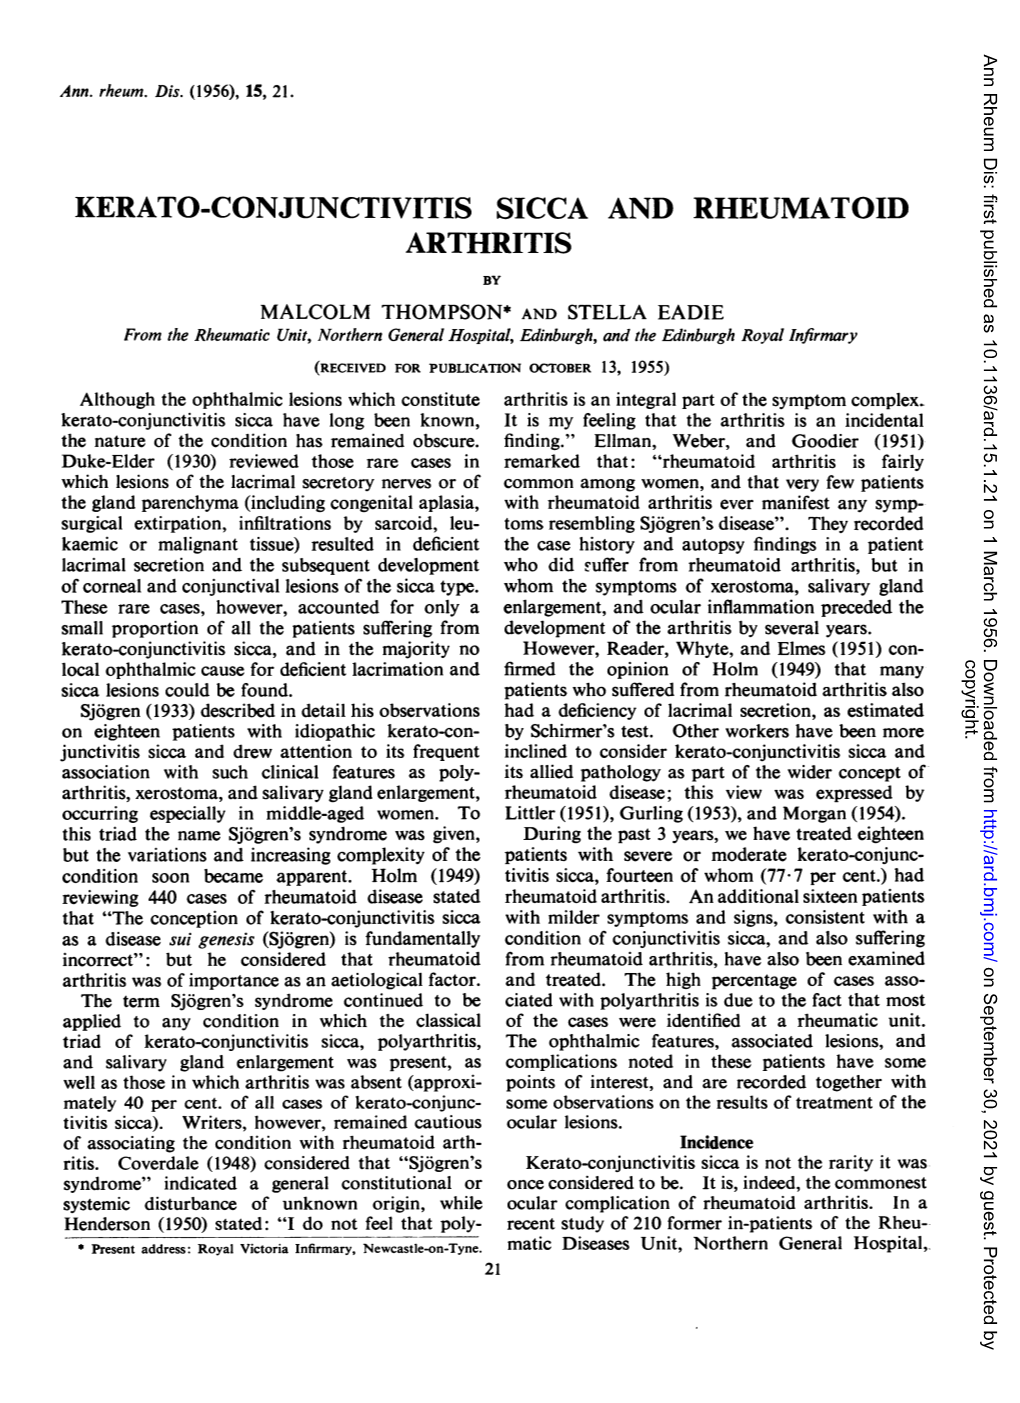 Kerato-Conjunctivitis Sicca and Rheumatoid Arthritis